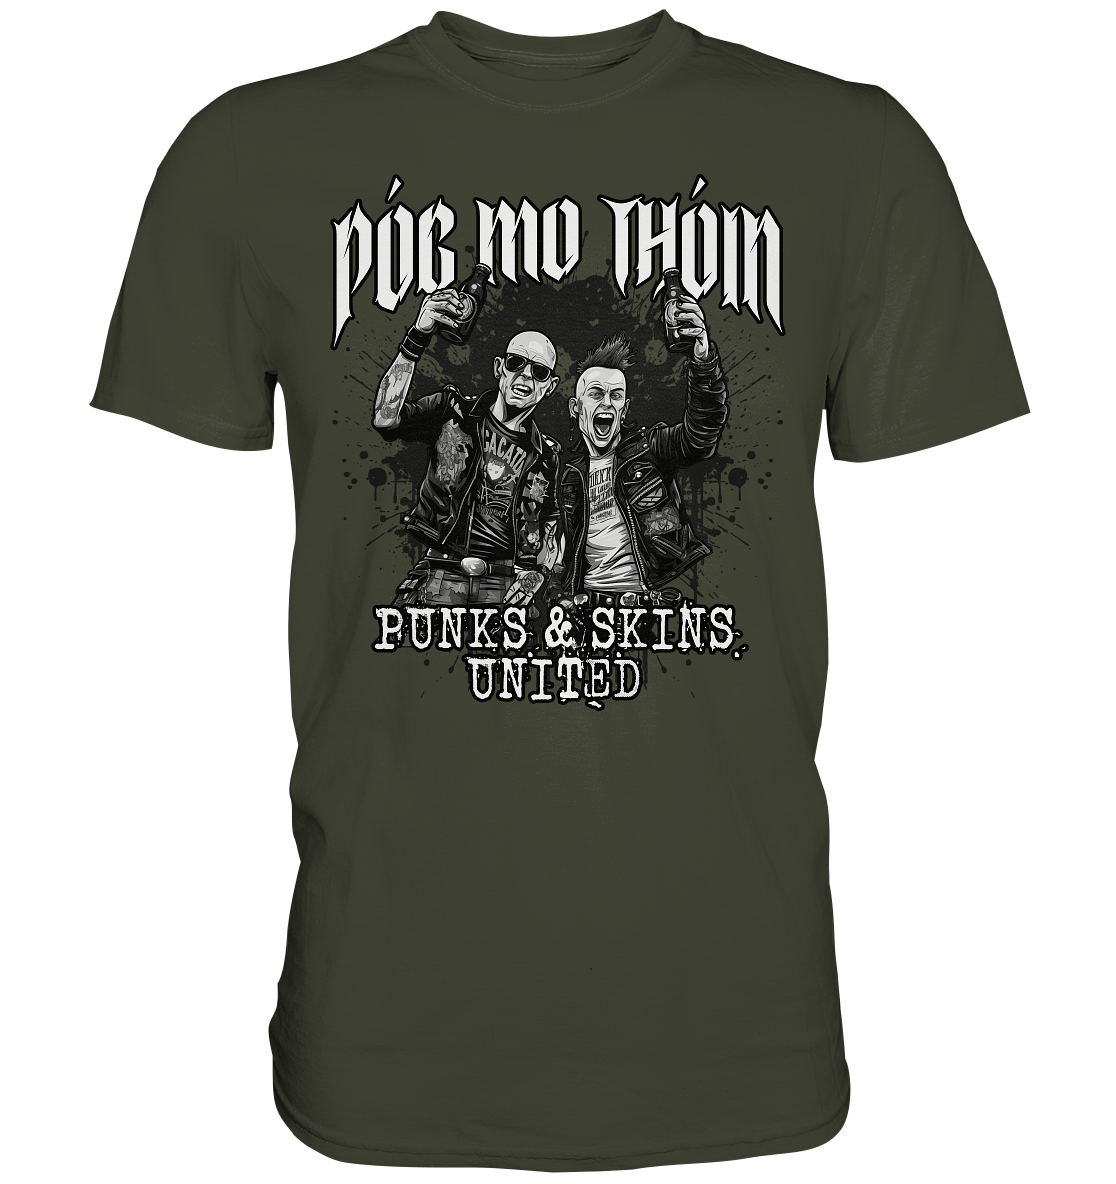 Póg Mo Thóin Streetwear "Punks & Skins United II" - Premium Shirt